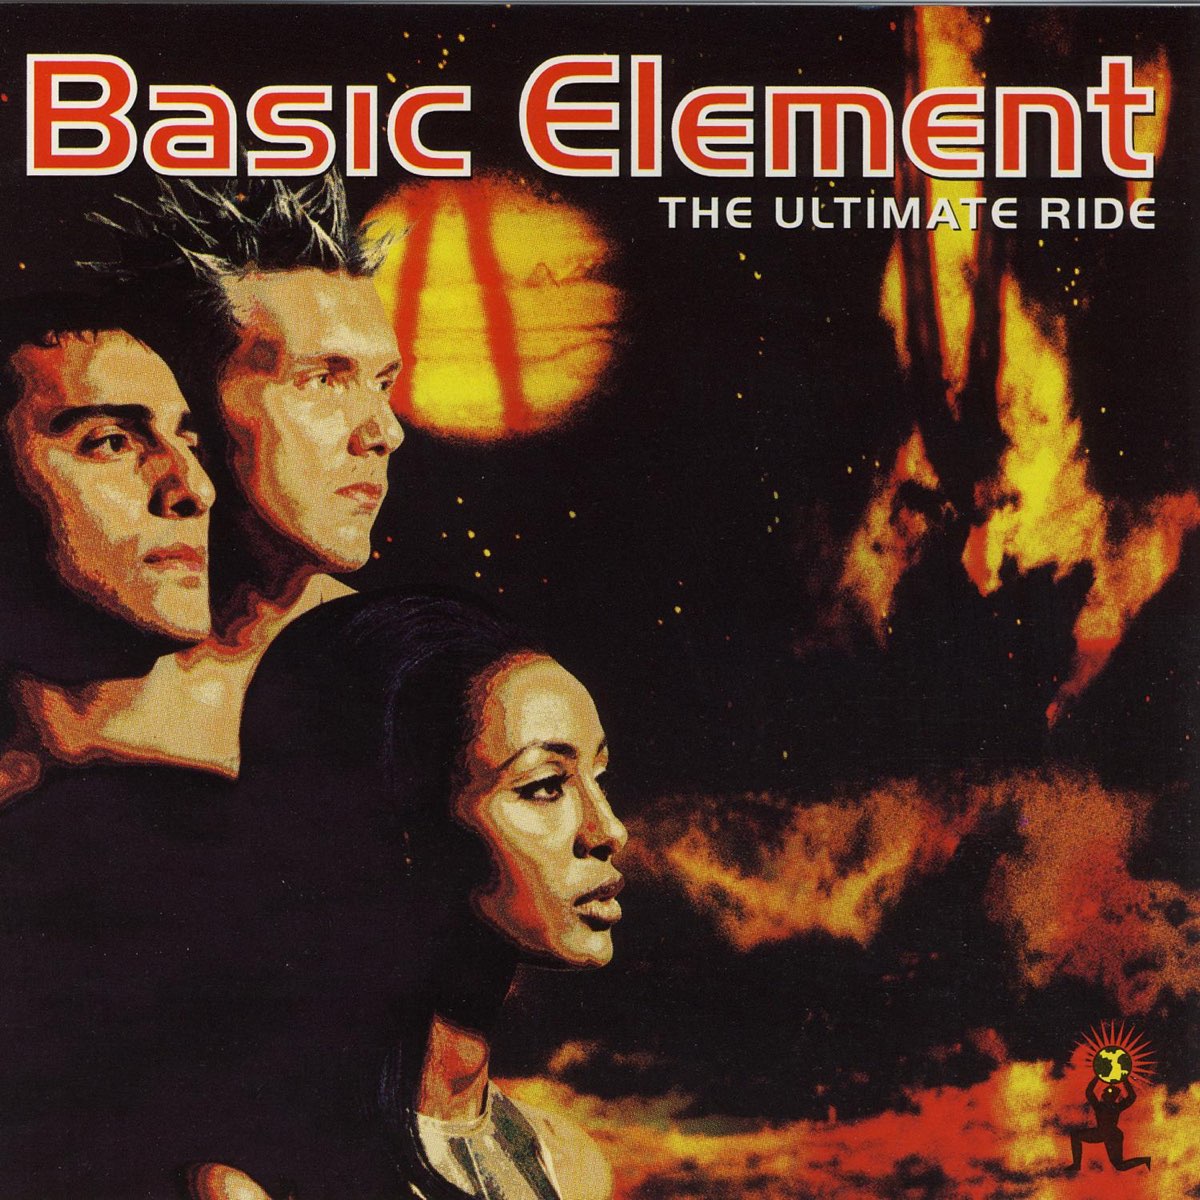 Promises element. Группа Basic element 1994. Basic element 1995. Обложка the Ultimate Ride (album 1995) Basic element. Basic element Basic Injection 1994 альбом.